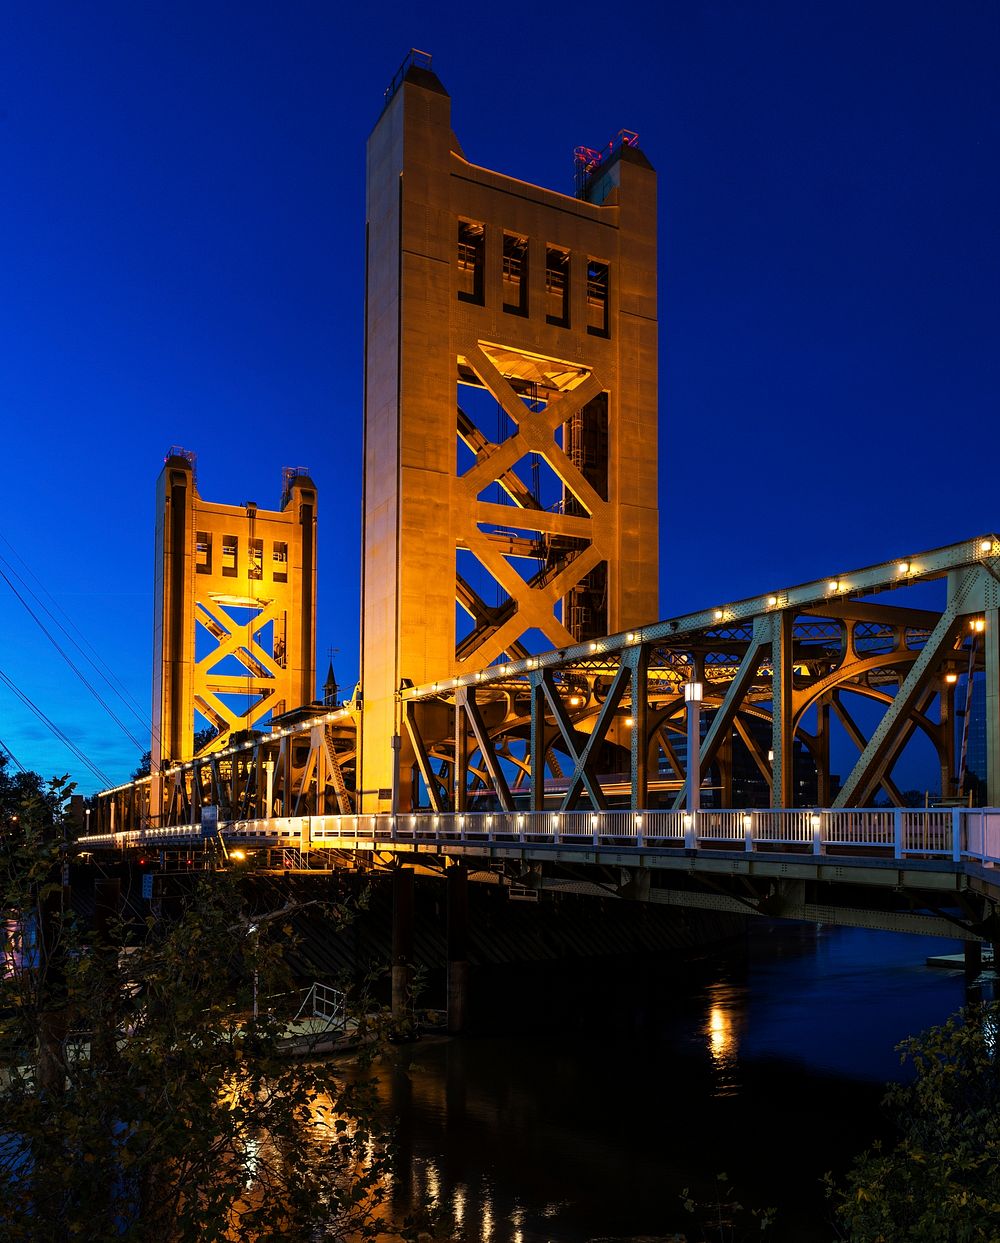 The Tower Bridge Sacramento river, USA - San Francisco Oakland Bay Bridge, USA - Original image from Carol M.…